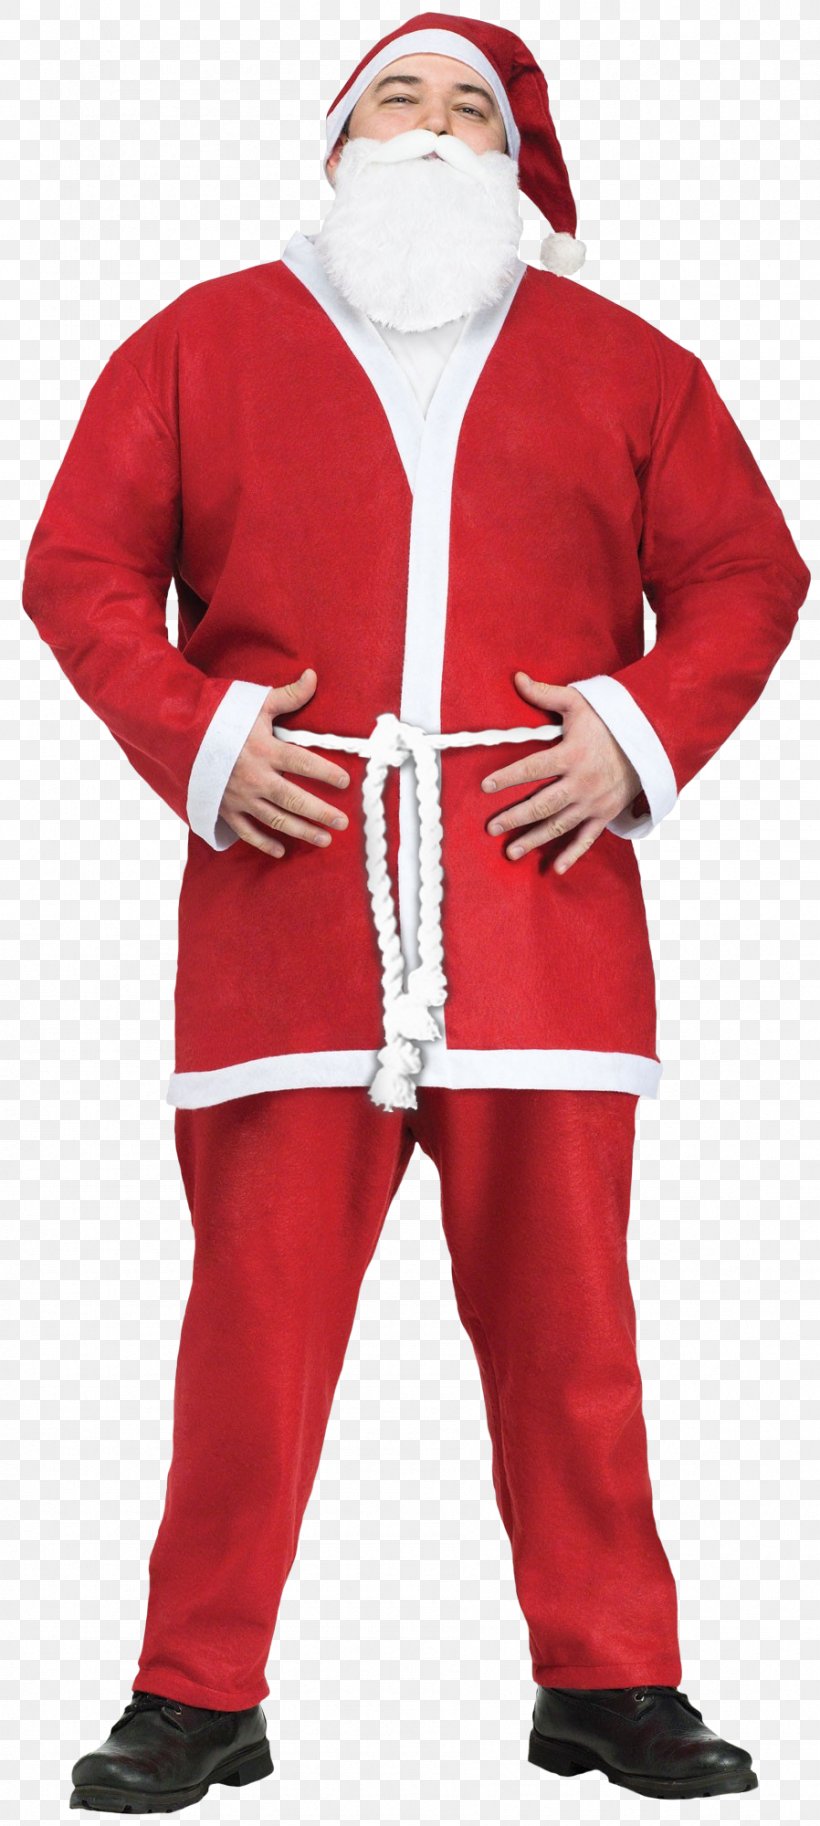 Santa Claus Costume Santa Suit Clothing, PNG, 898x2000px, Santa Claus, Christmas, Clothing, Clothing Sizes, Costume Download Free